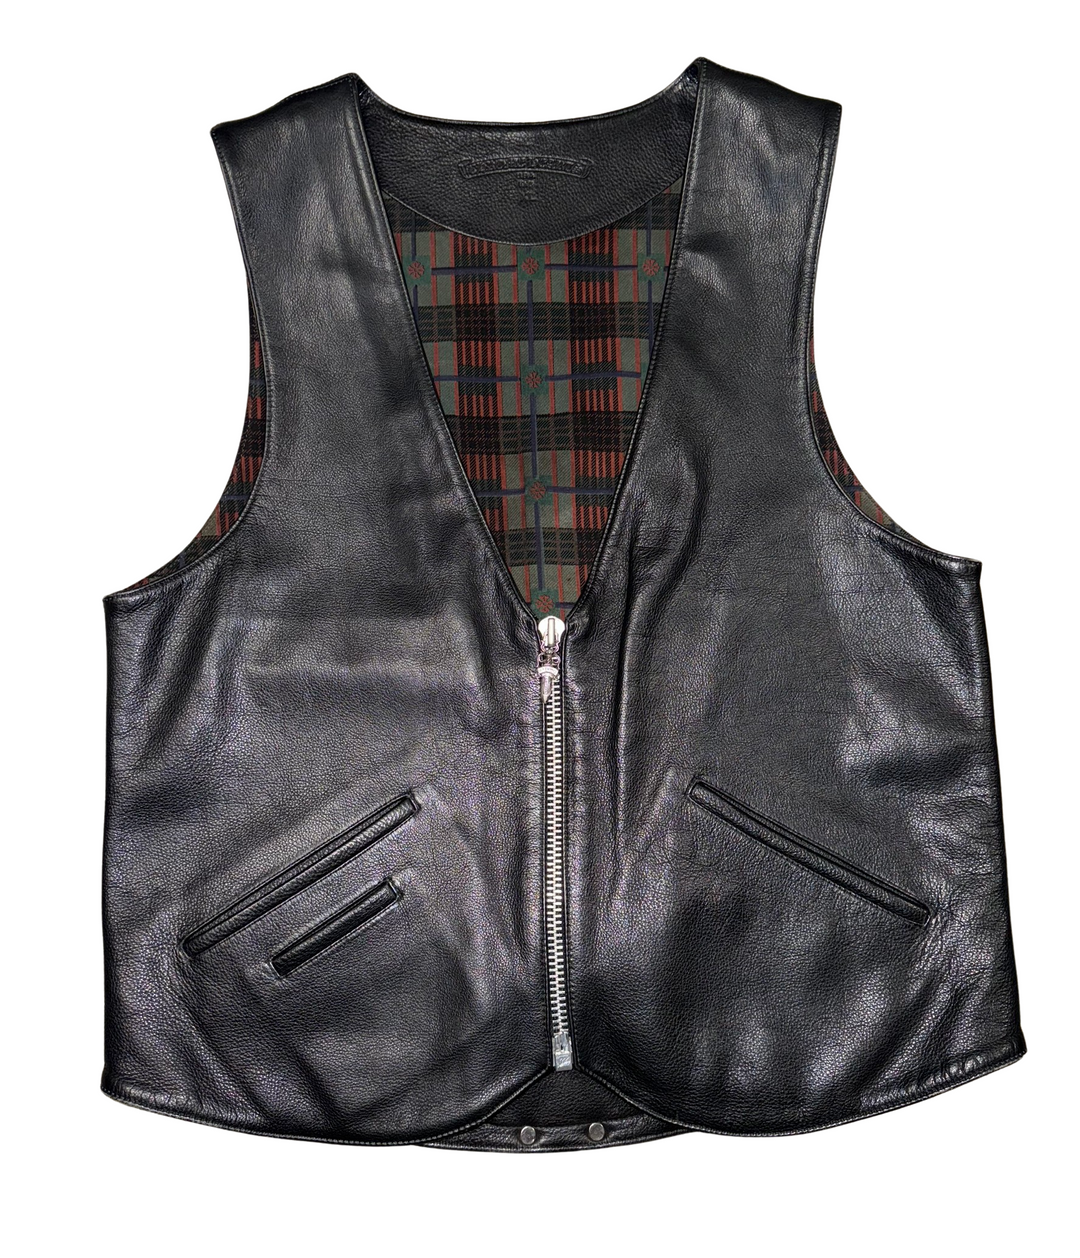 Chrome Hearts 'Black' Leather Cross Patch Biker Vest